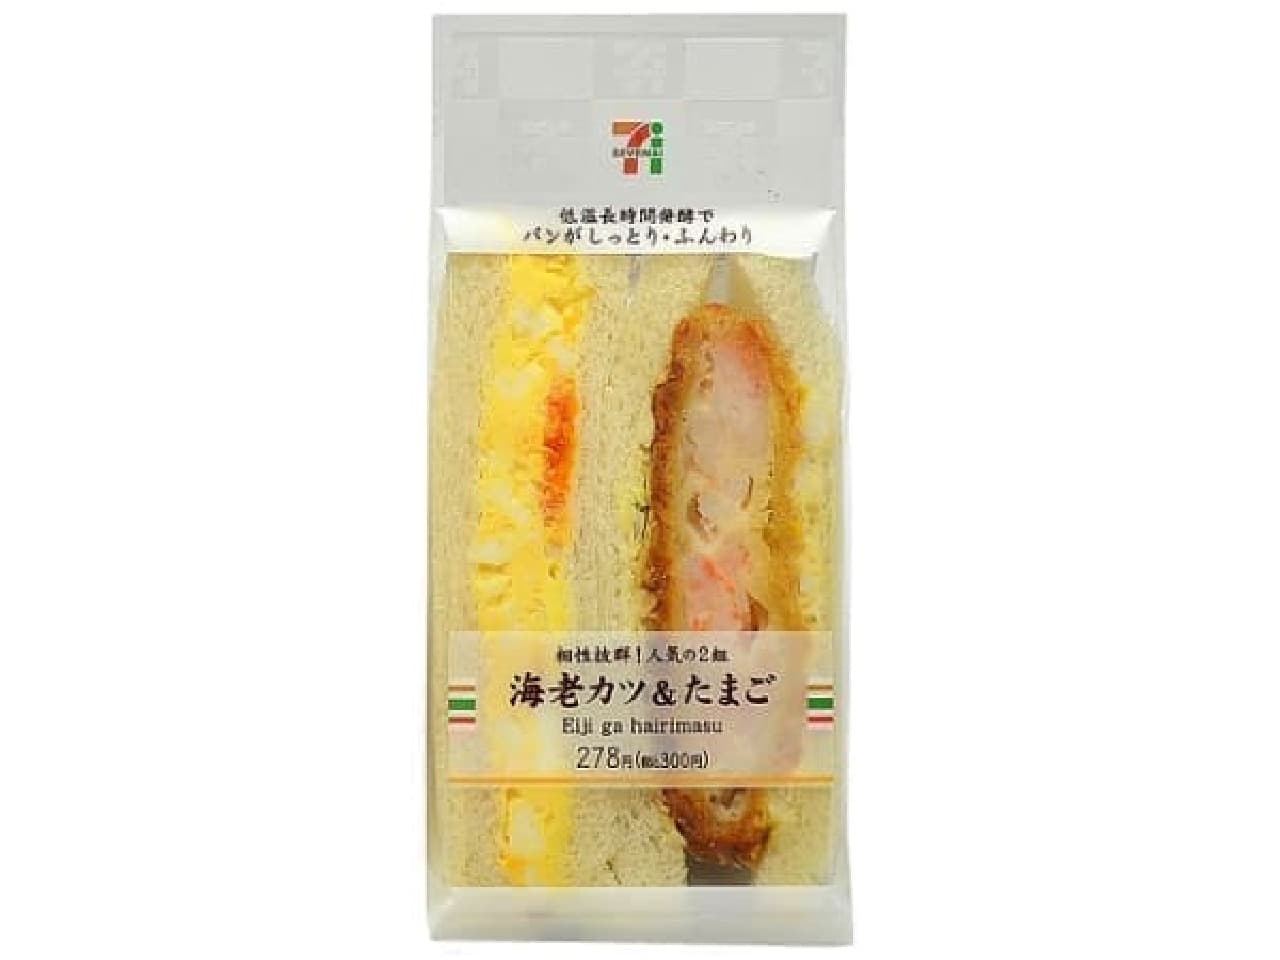 7-ELEVEN "Ebi cutlet & egg sandwich"